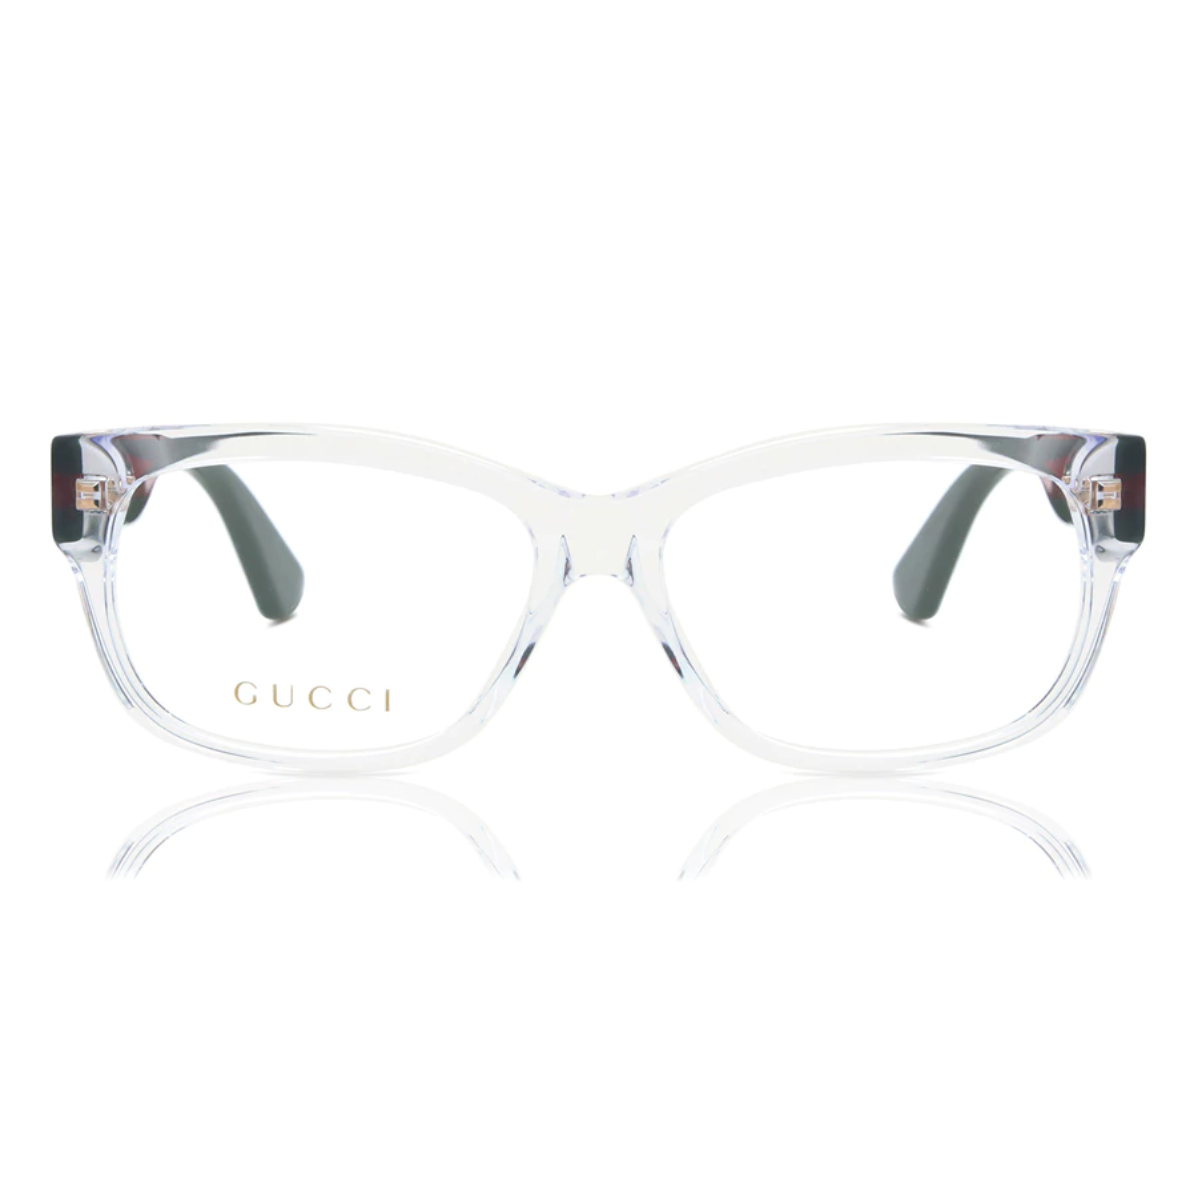 "Gucci 0278O Eyewear: Men and Women's Frames"